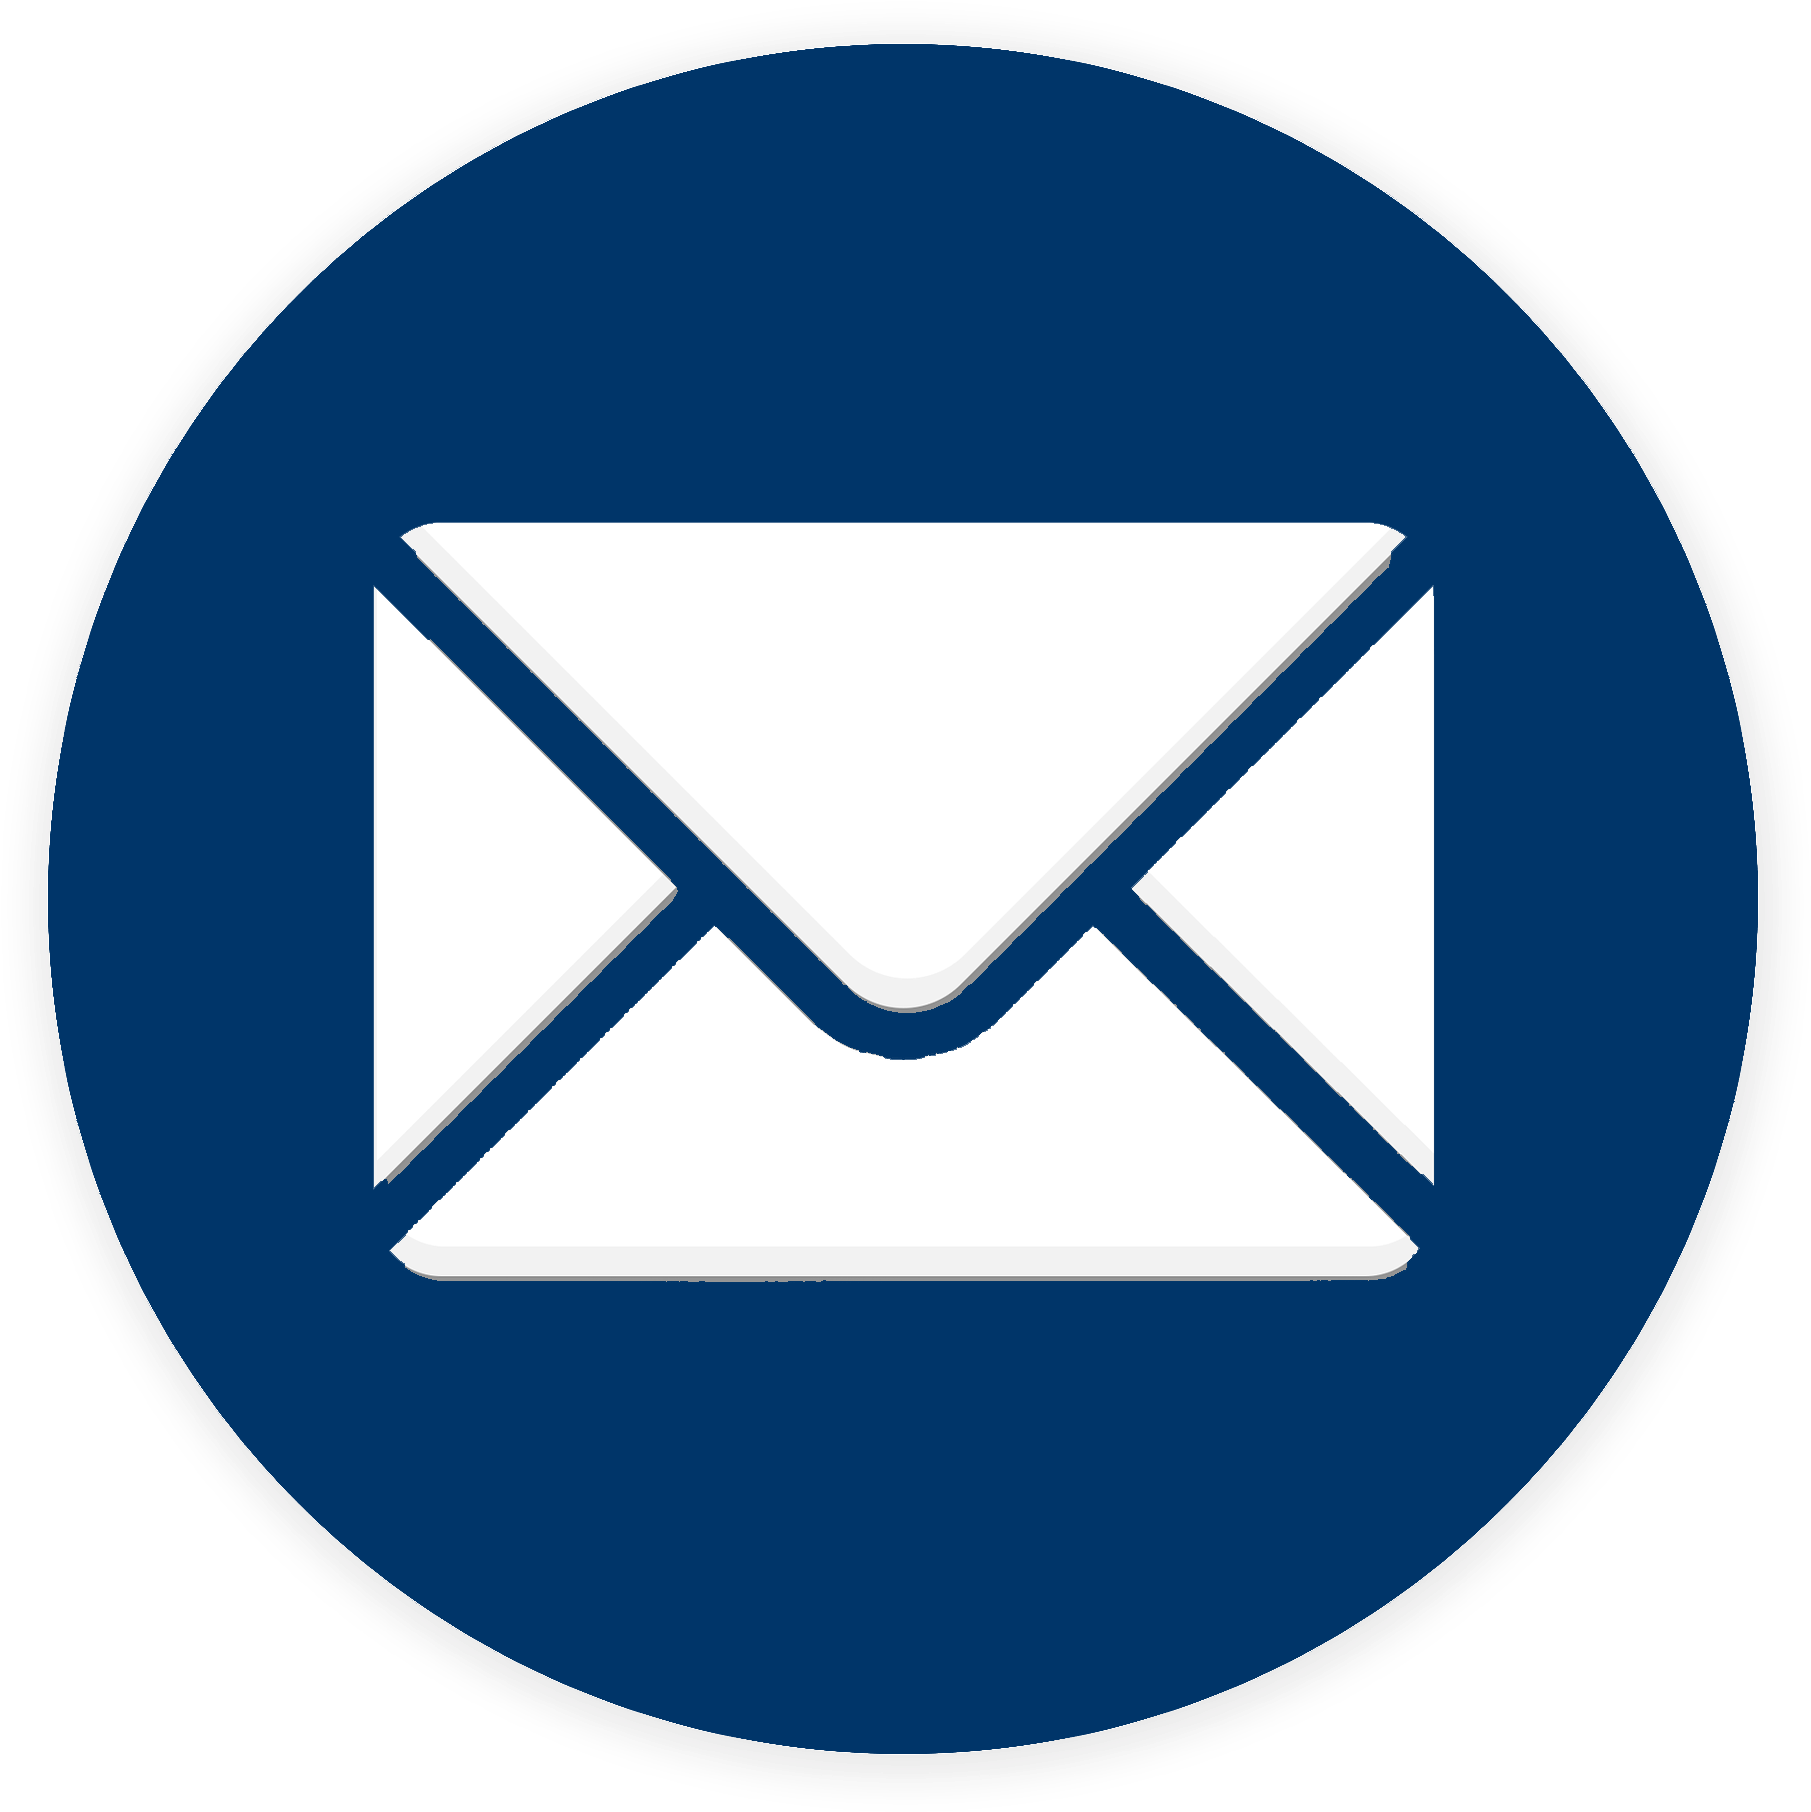 Mail spb ru. Значок емайл. Значок письма. Электронная почта иконка. Пиктограмма почта.